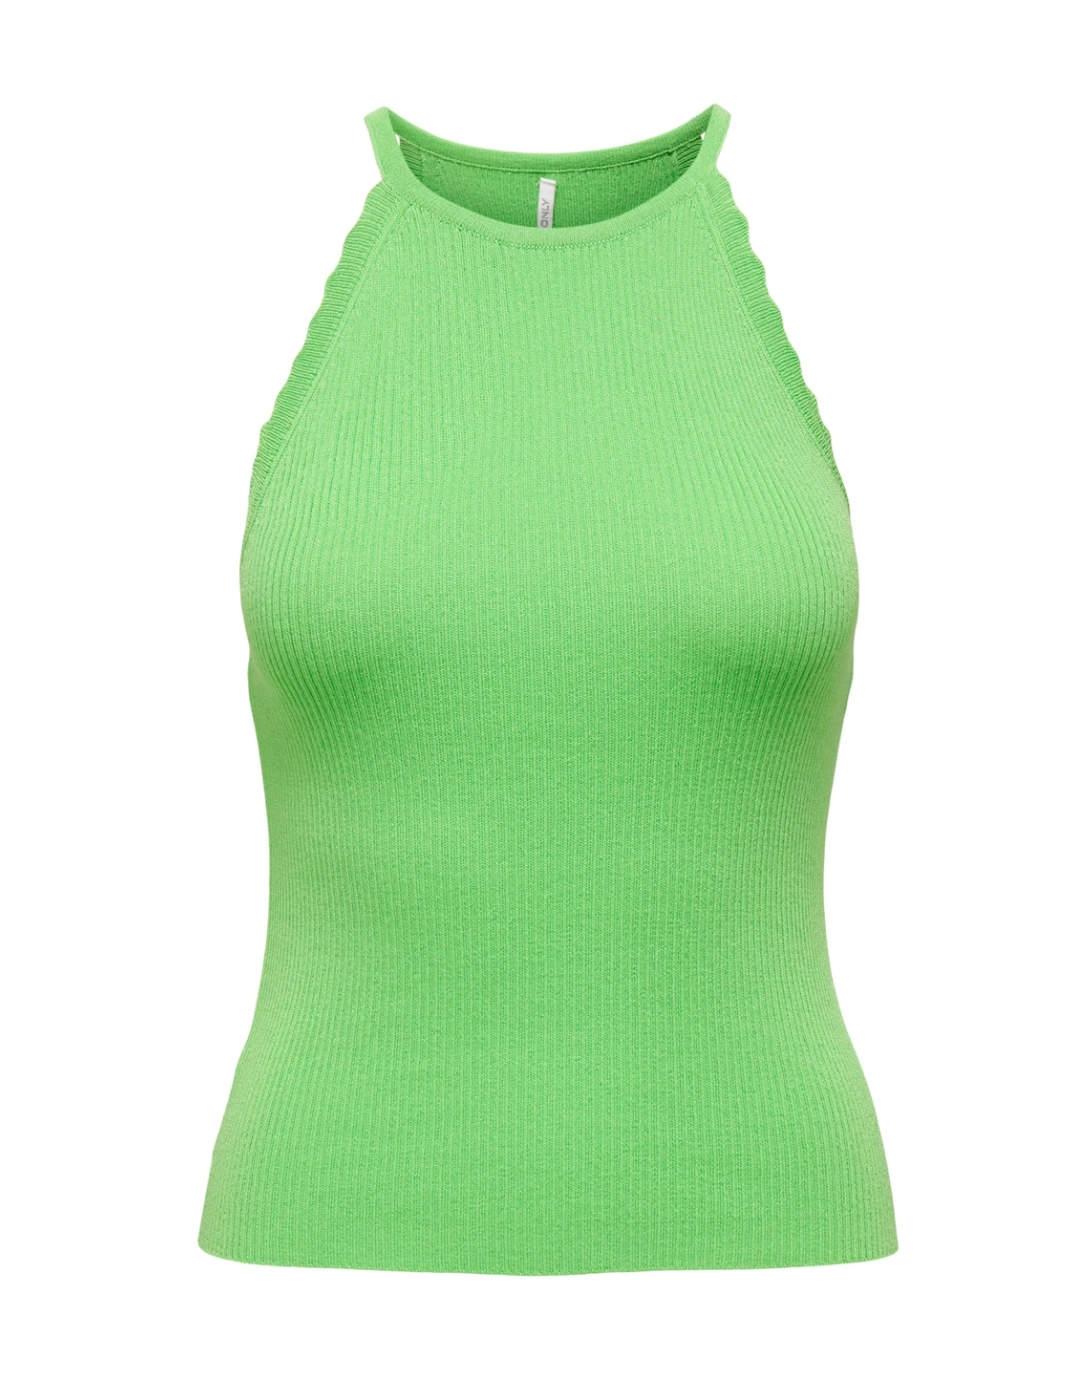 Camiseta Only Gemma verde tirantes para mujer